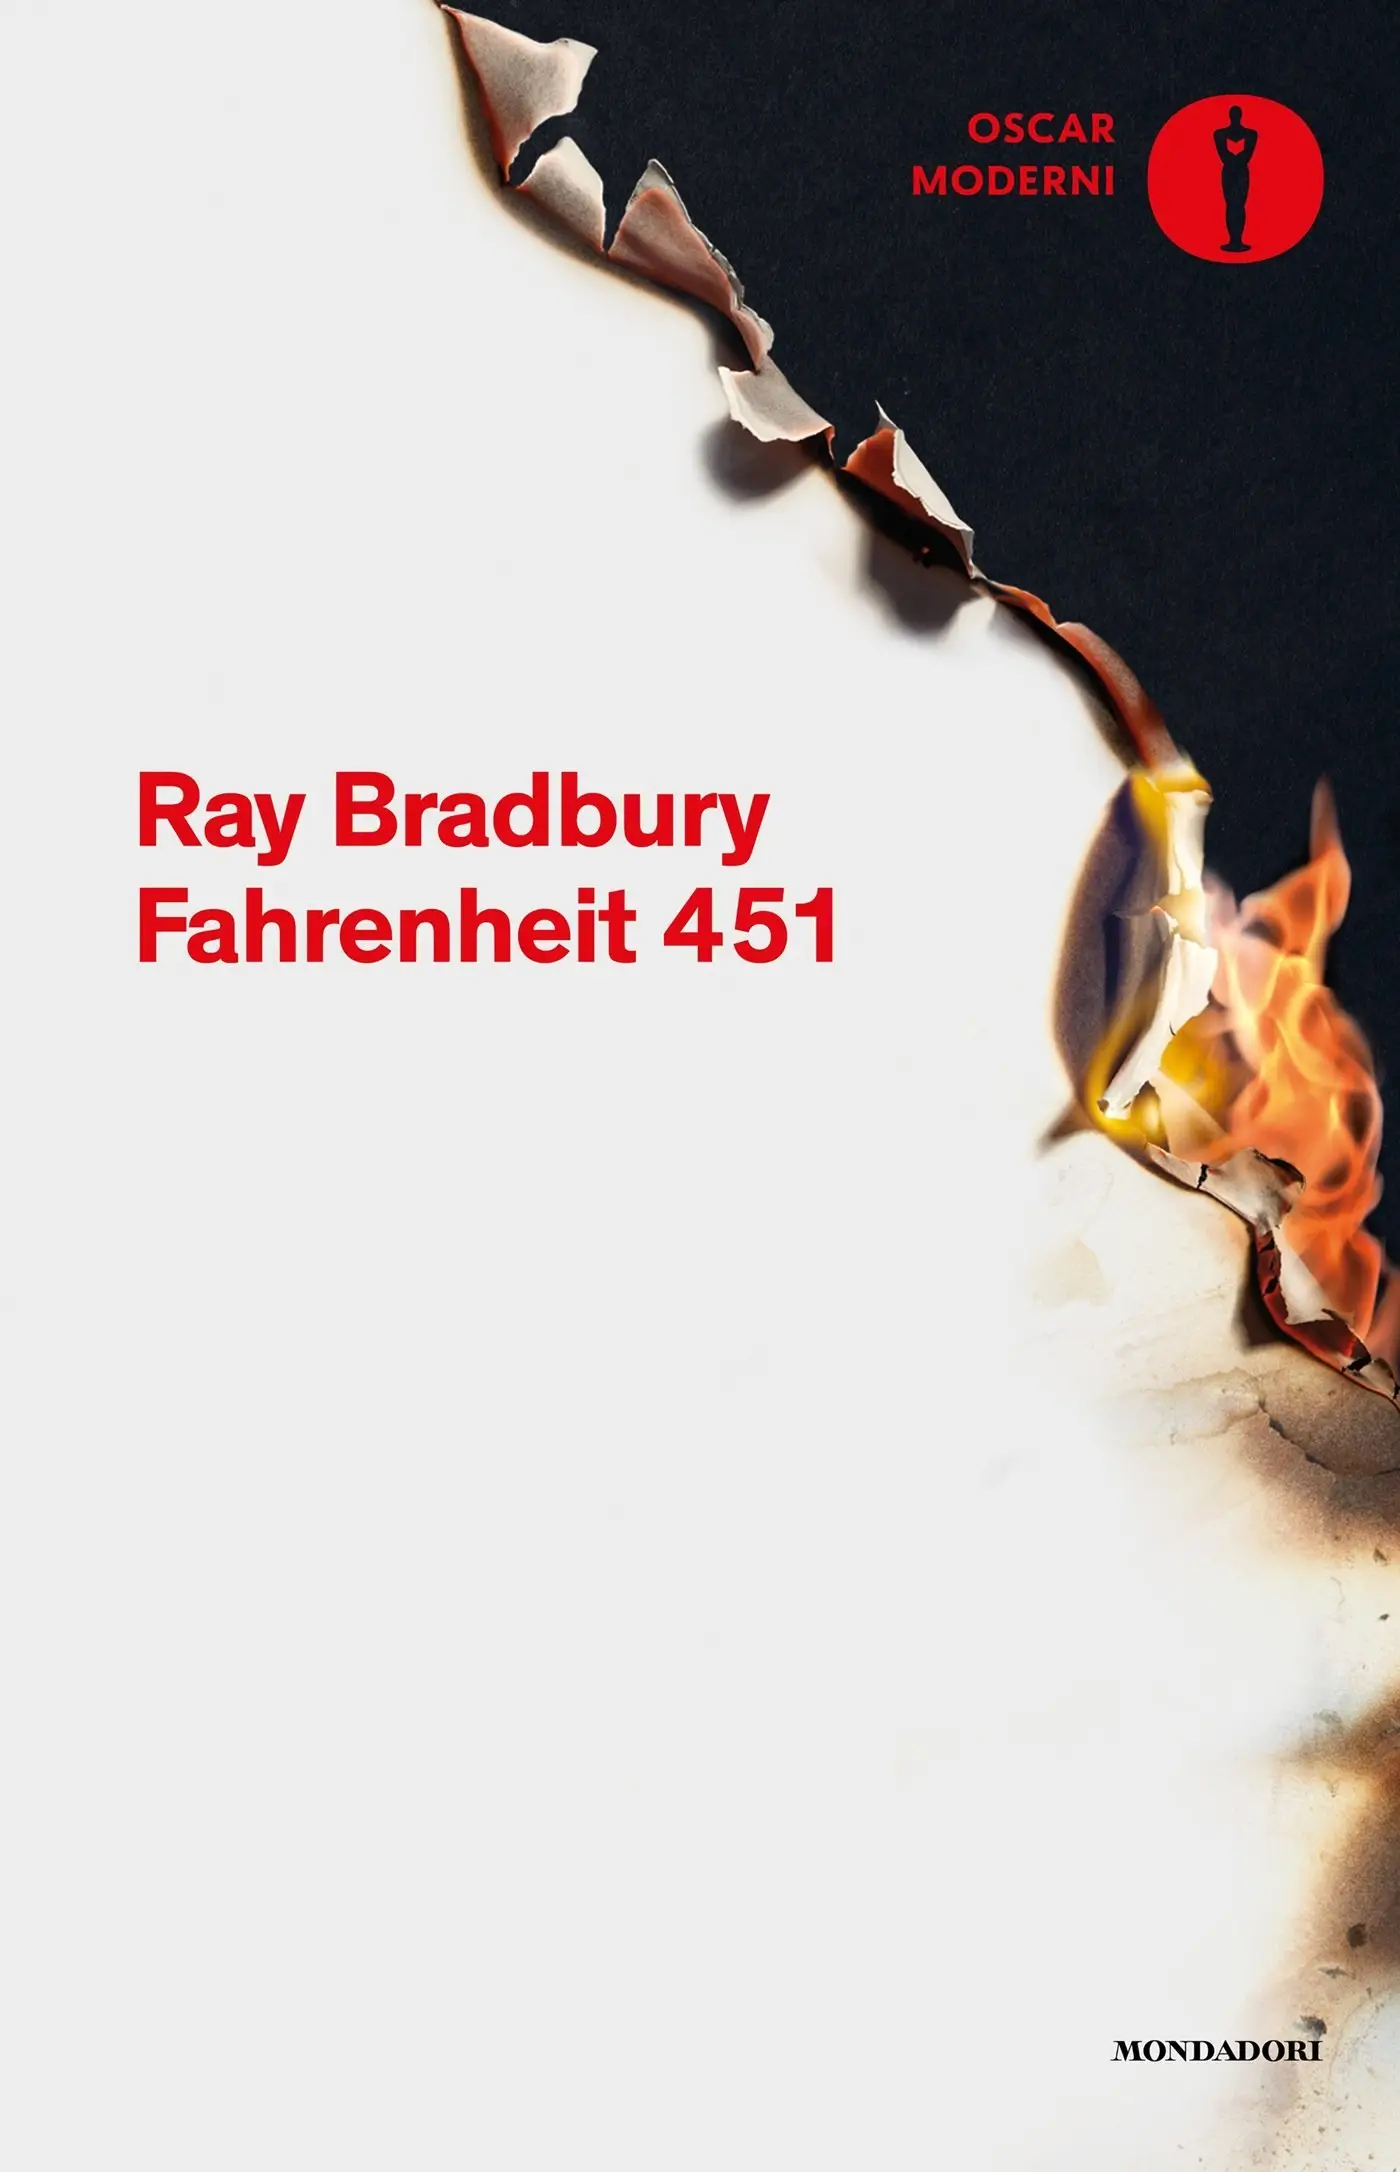 451 градус по фаренгейту в цельсиях. Ray Bradbury "Fahrenheit 451". 451 Градус по Фаренгейту арт. 451 Градус по Фаренгейту саламандра.